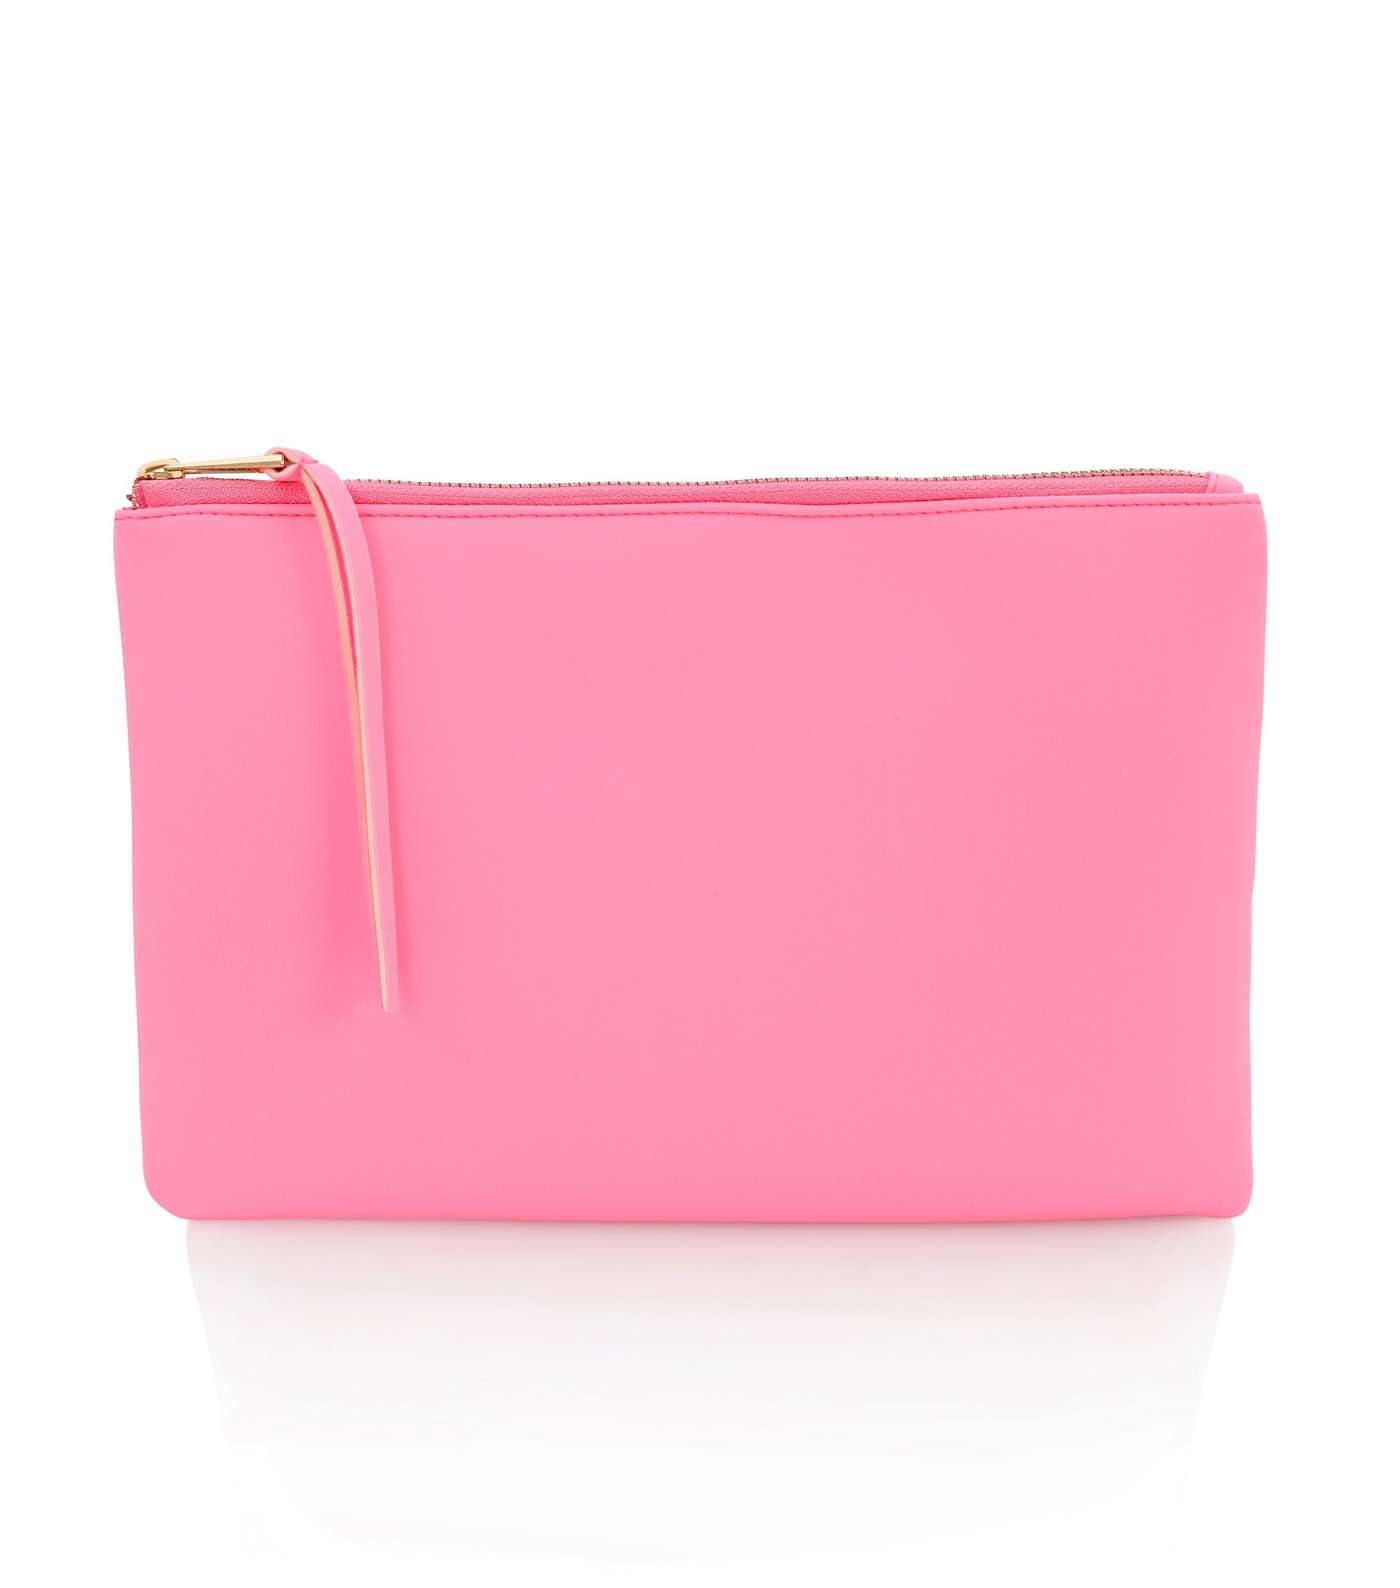 South Beach Bright Pink Wristlet Clutch Bag